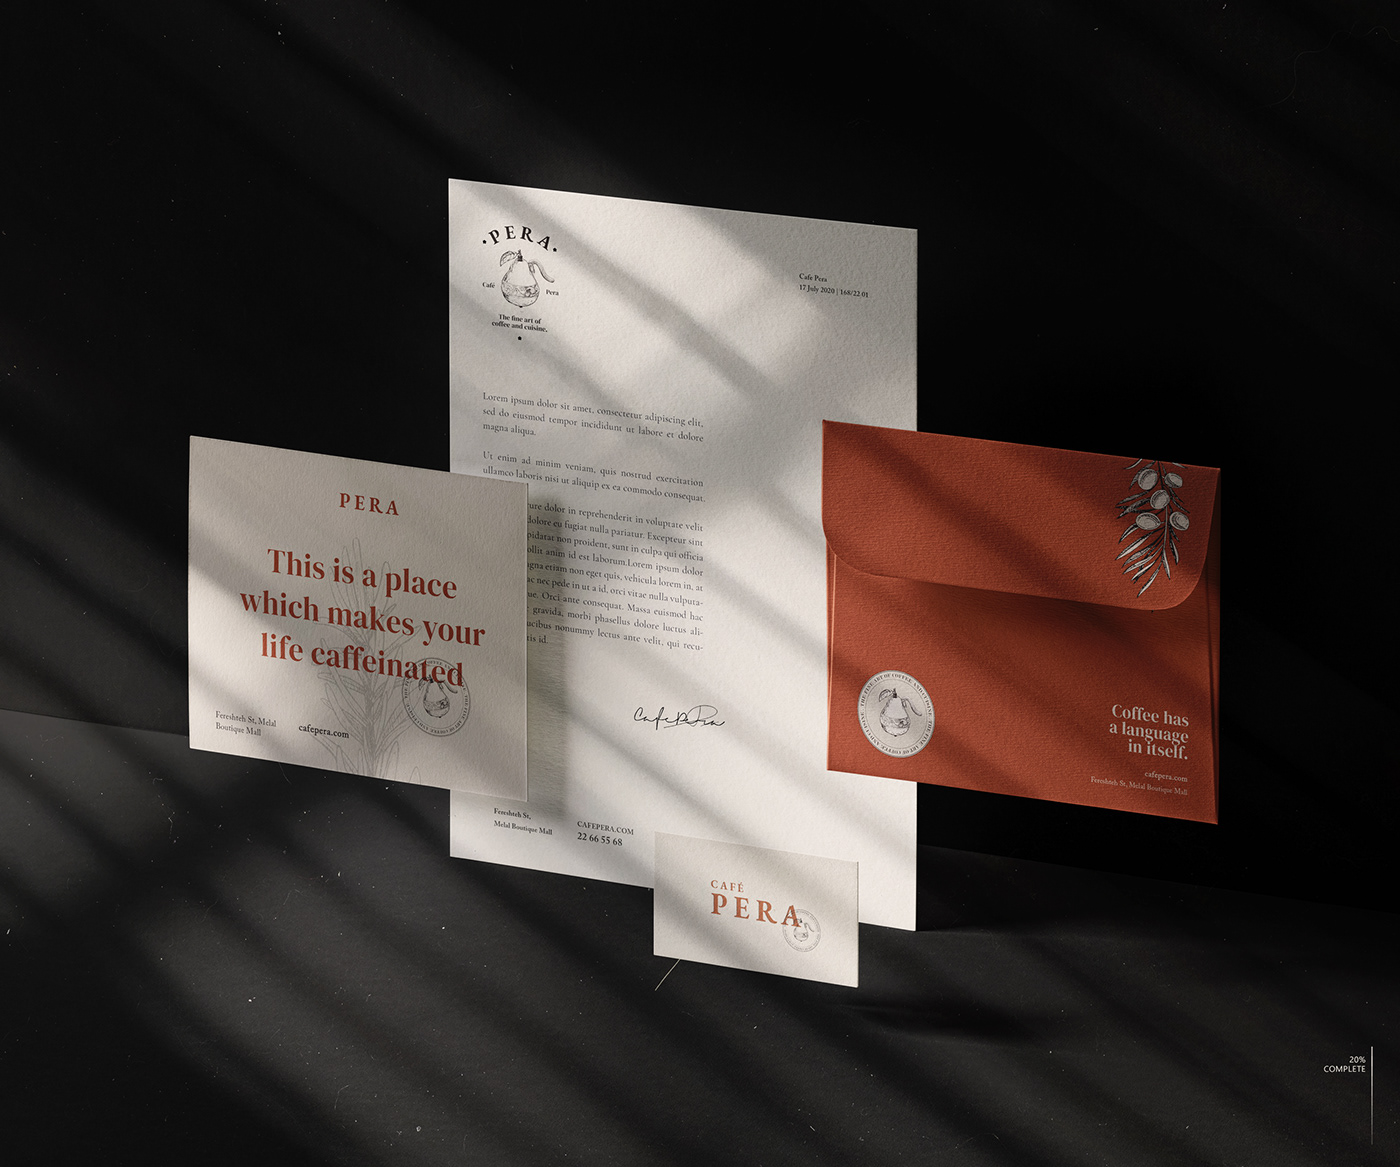 visualidentity
MarketingMaterial
BrandMerchandise
stationery
a4
paper
invitation
letterhead
cafe 